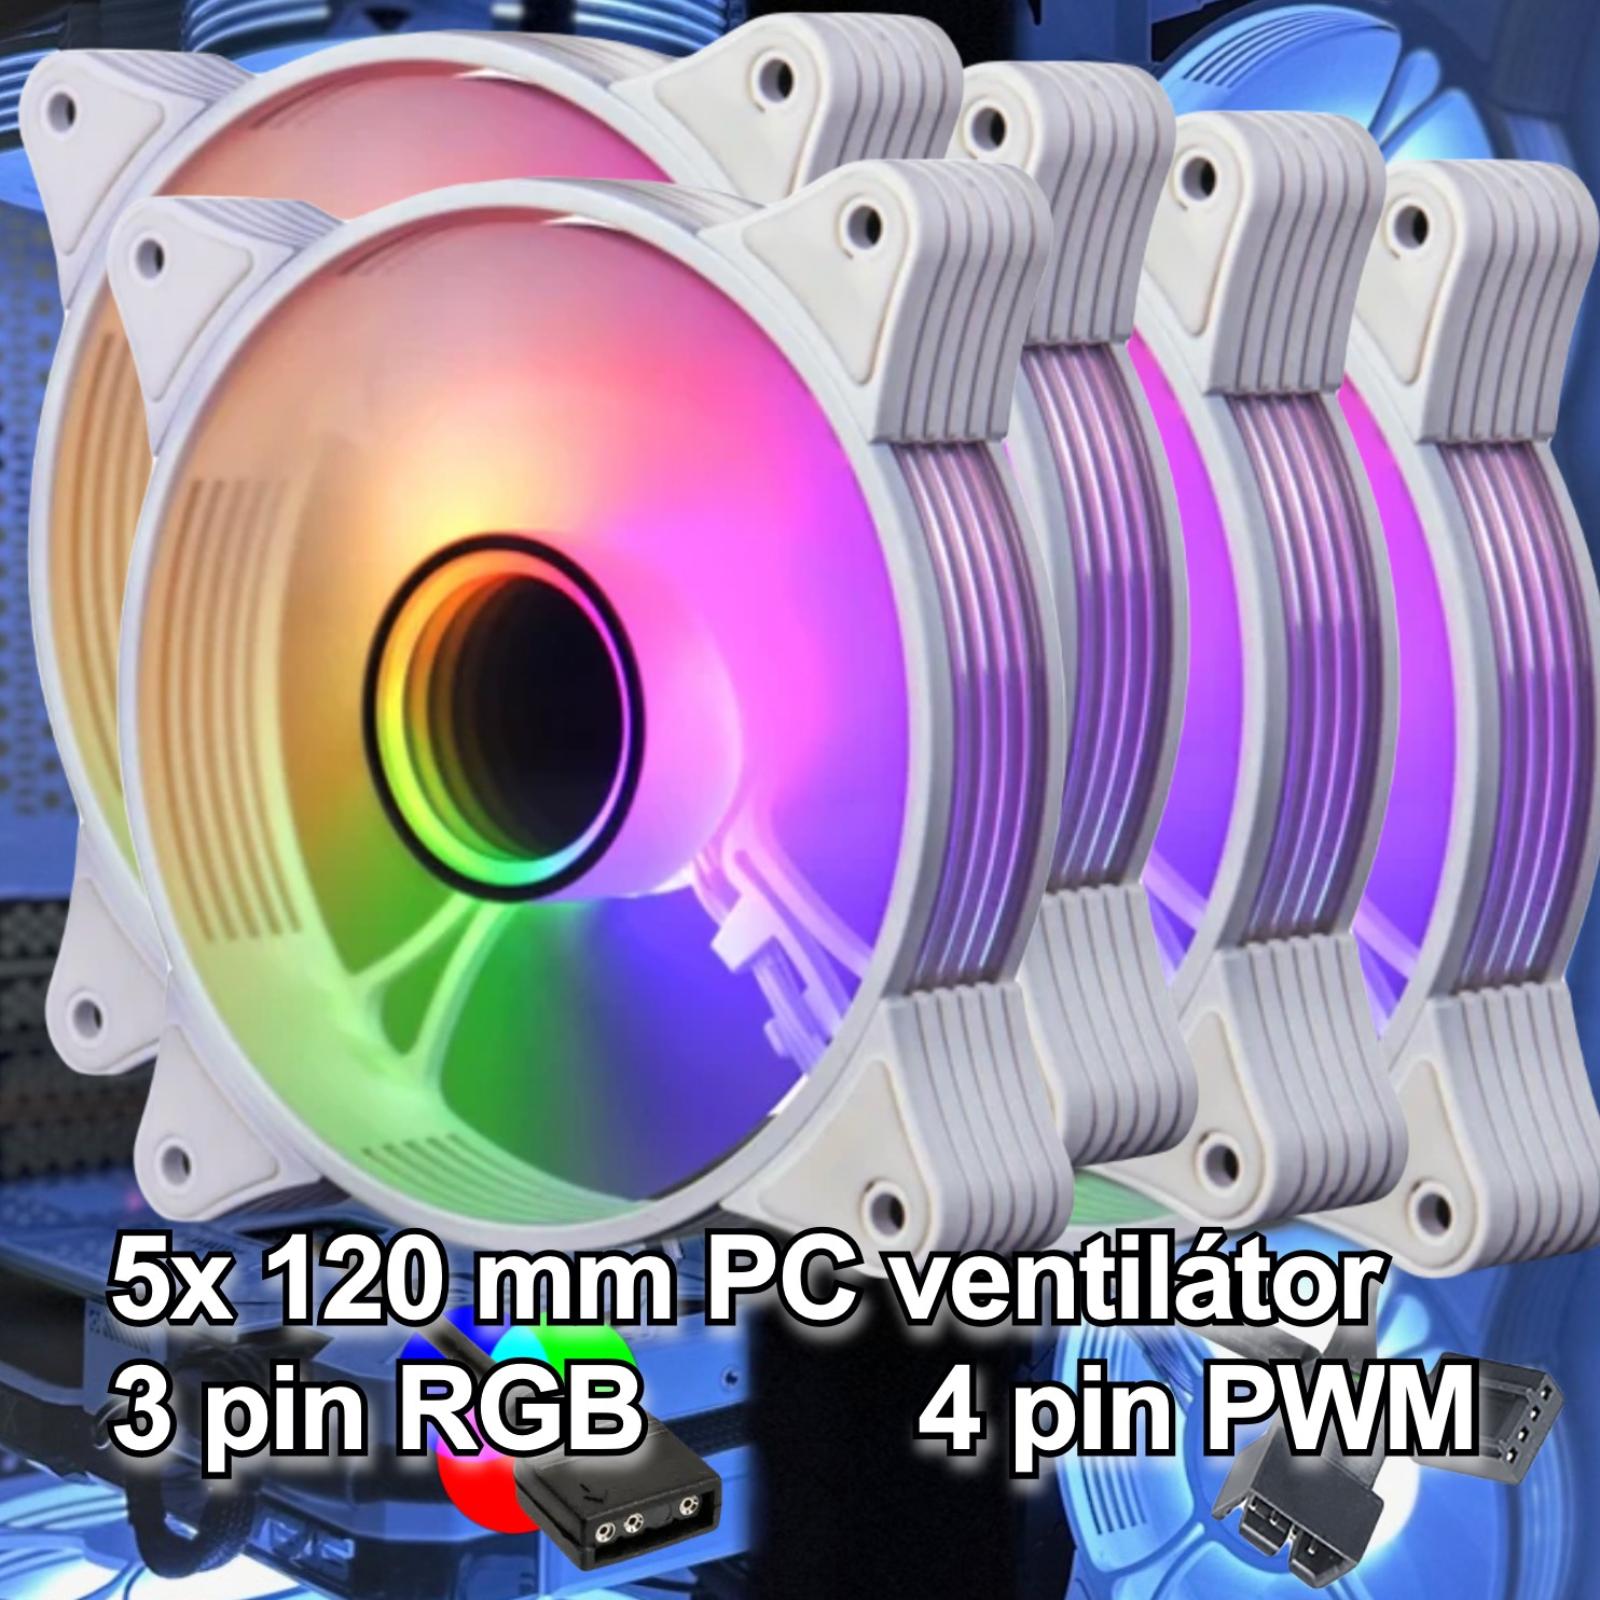 Bílý RGB PC větráček ventilátor 120mm 5V 3 pin aRGB, PWM 4pin (5x) - Počítače a hry